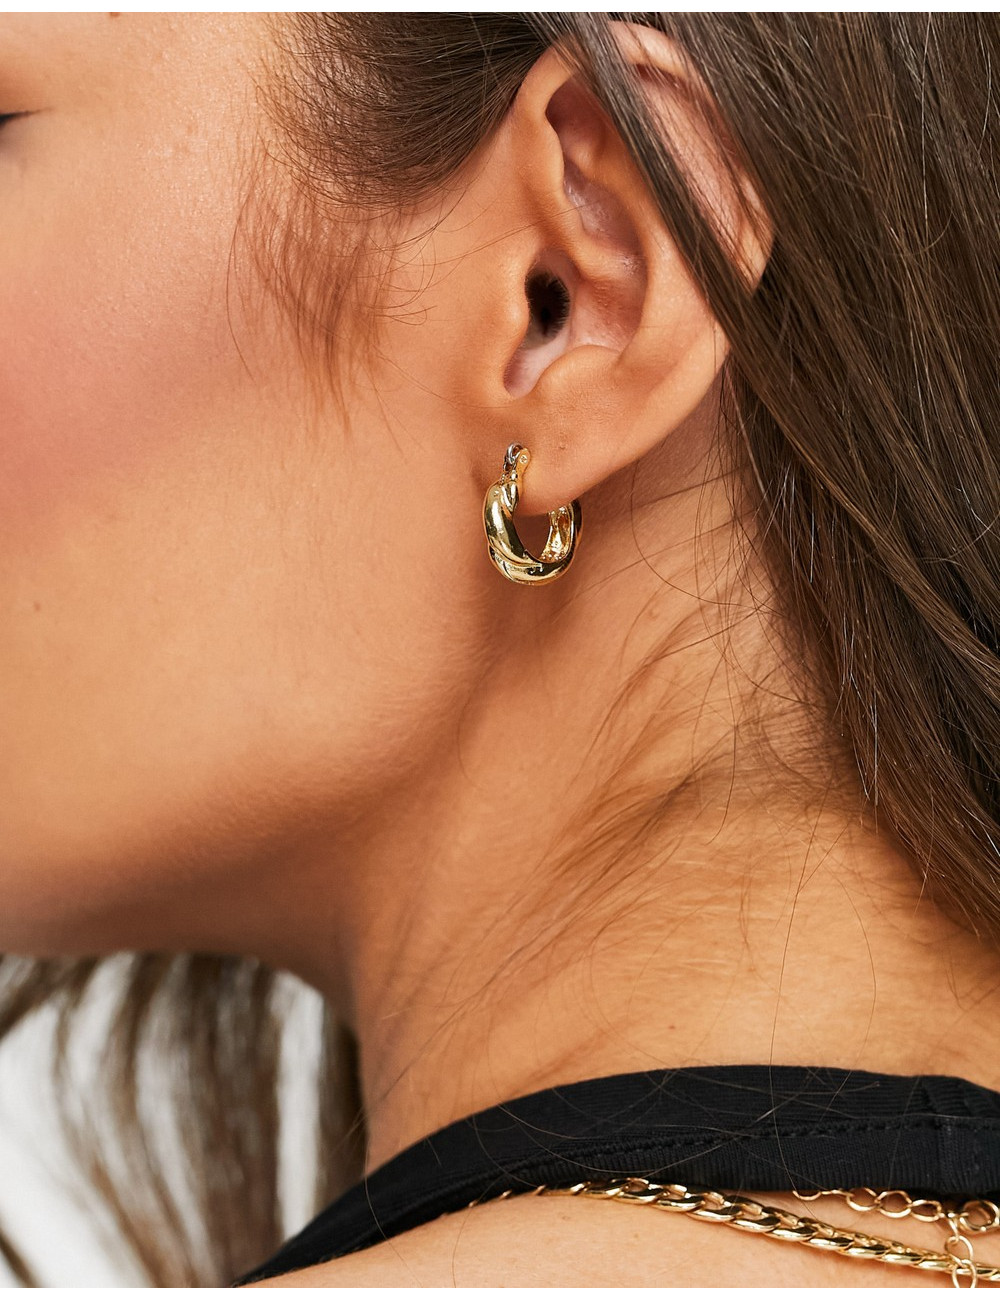 SVNX small hoop earrings